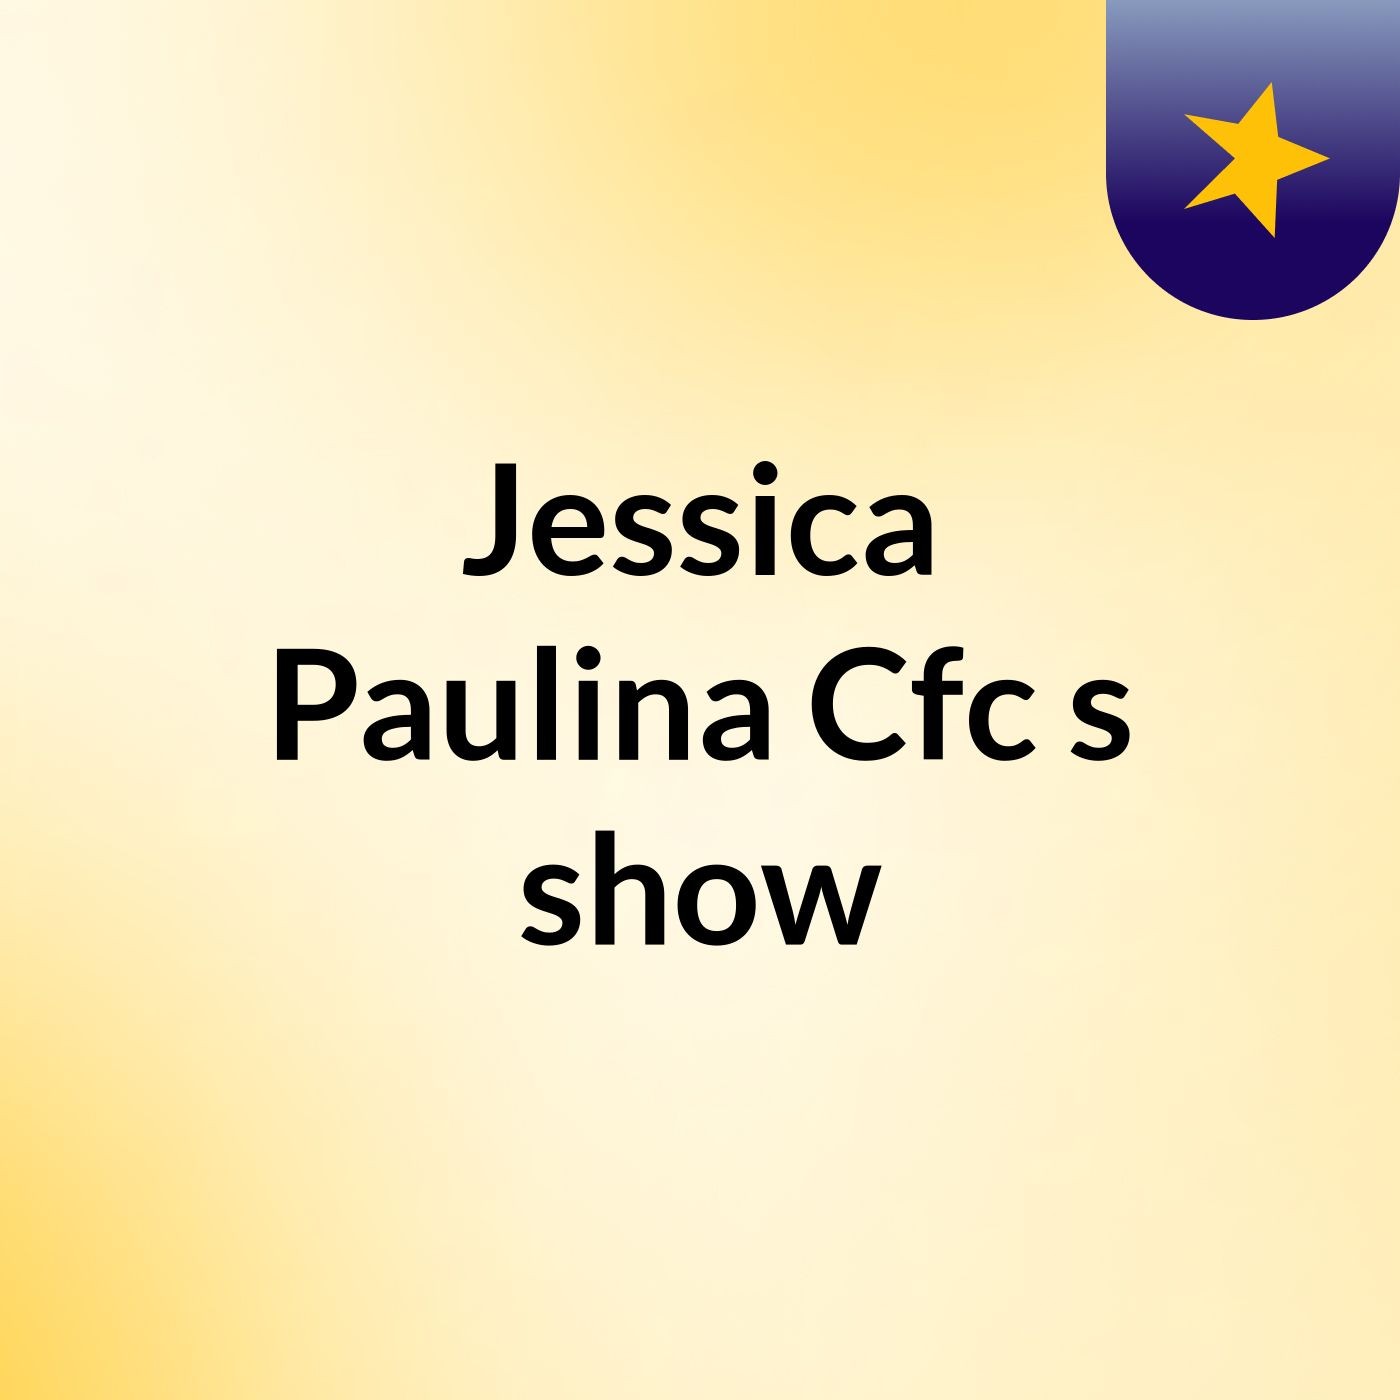 Jessica Paulina Cfc's show